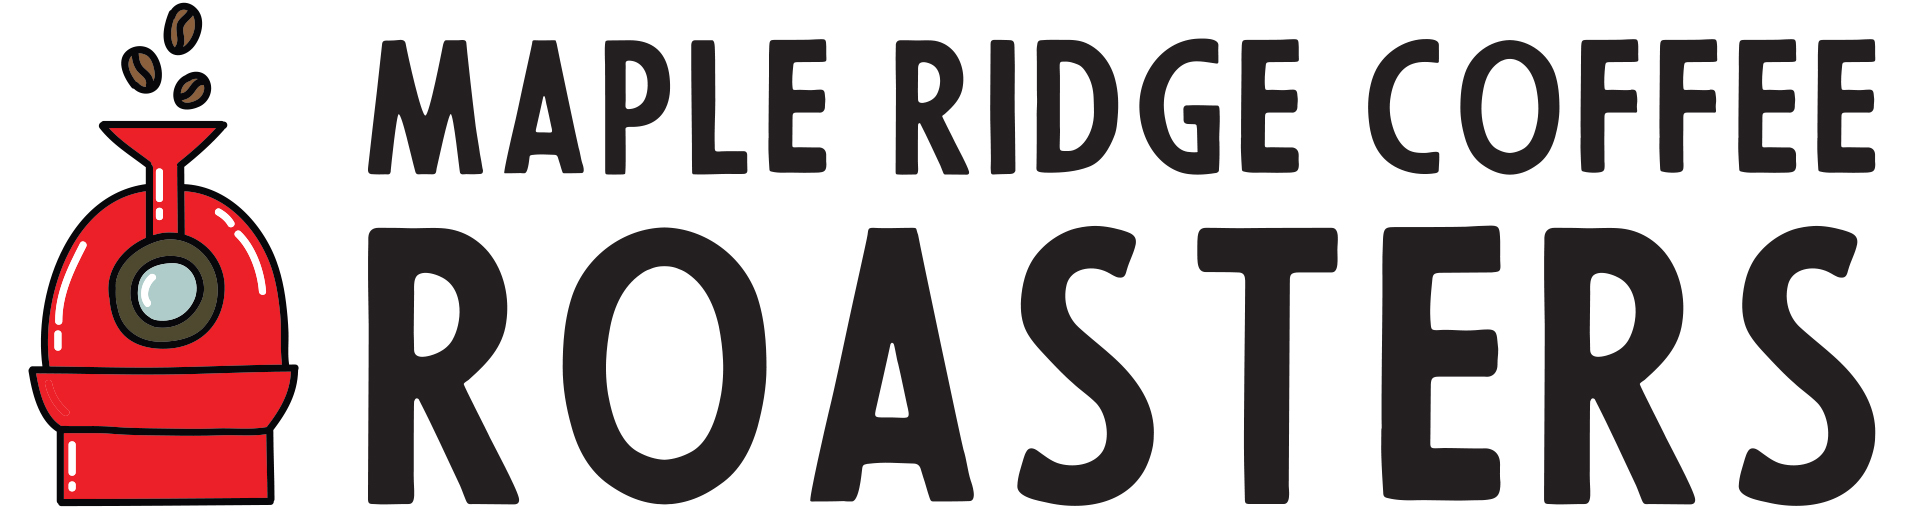 Maple Ridge Coffee Roasters